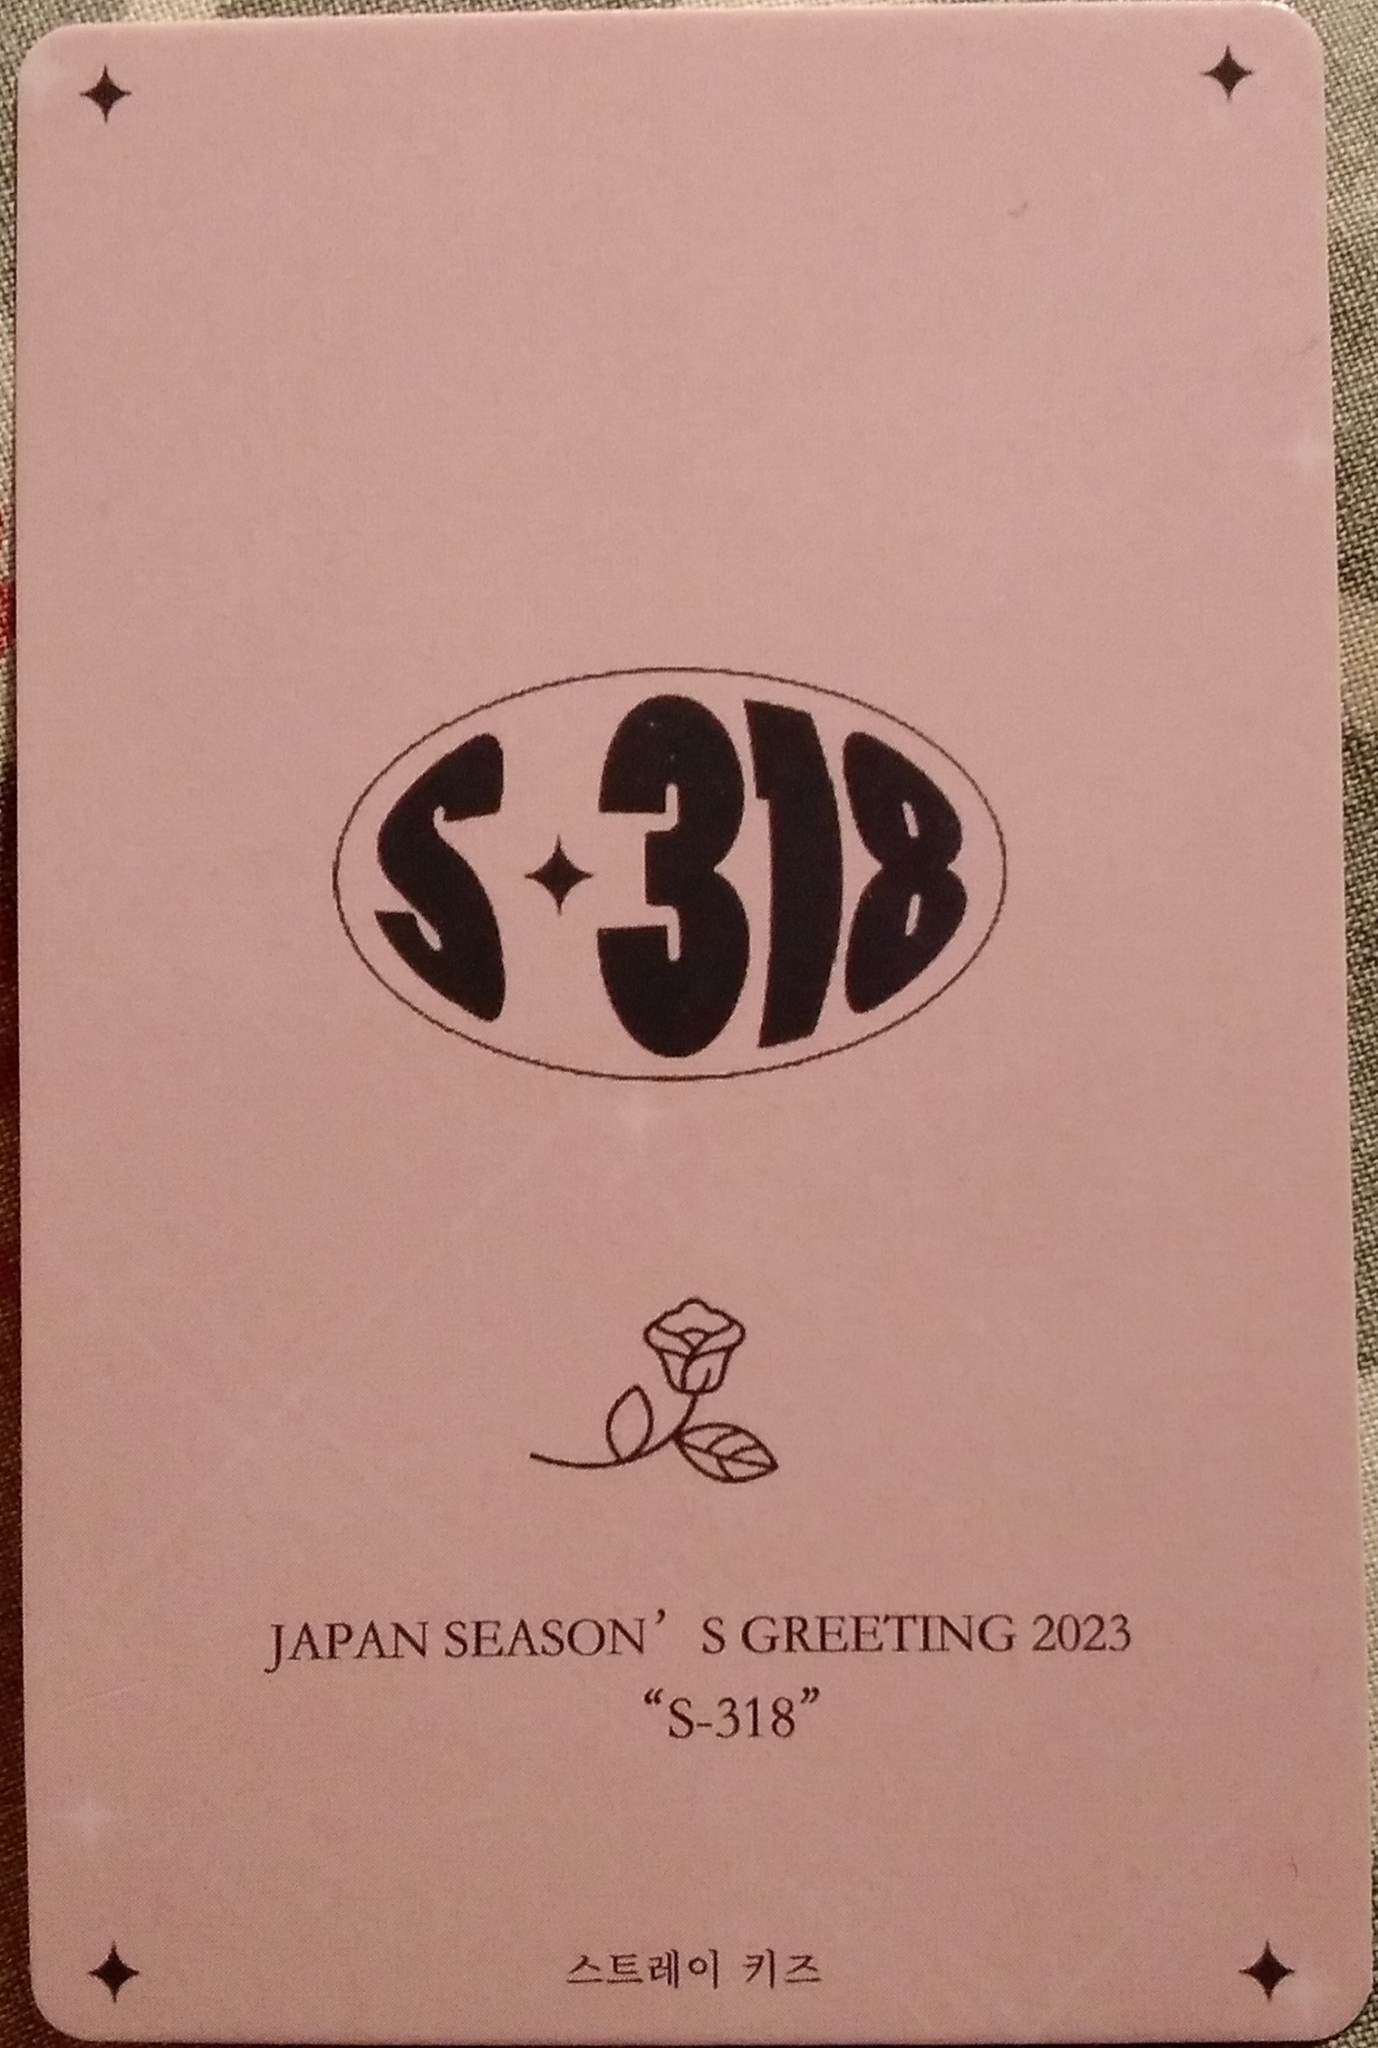 Photocard  STRAYKIDS  Japan season s greetings 2023  "S-318"  Hyunjin  Lee felix  Changbin  Han jisung